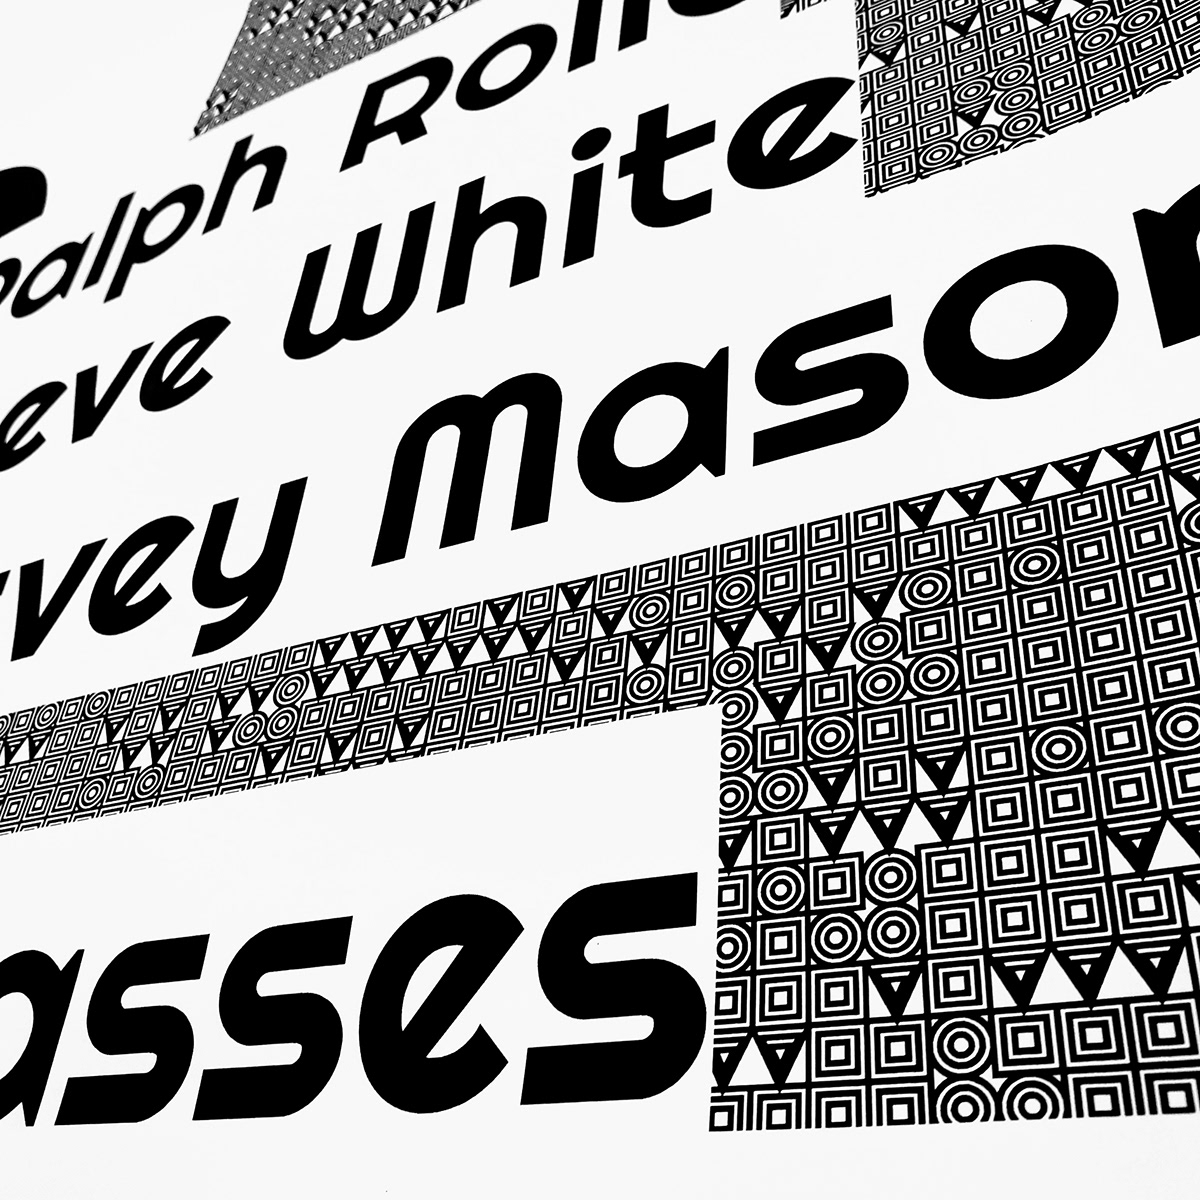 masterclass drum pattern processing Coimbra bimm London music poster black and white